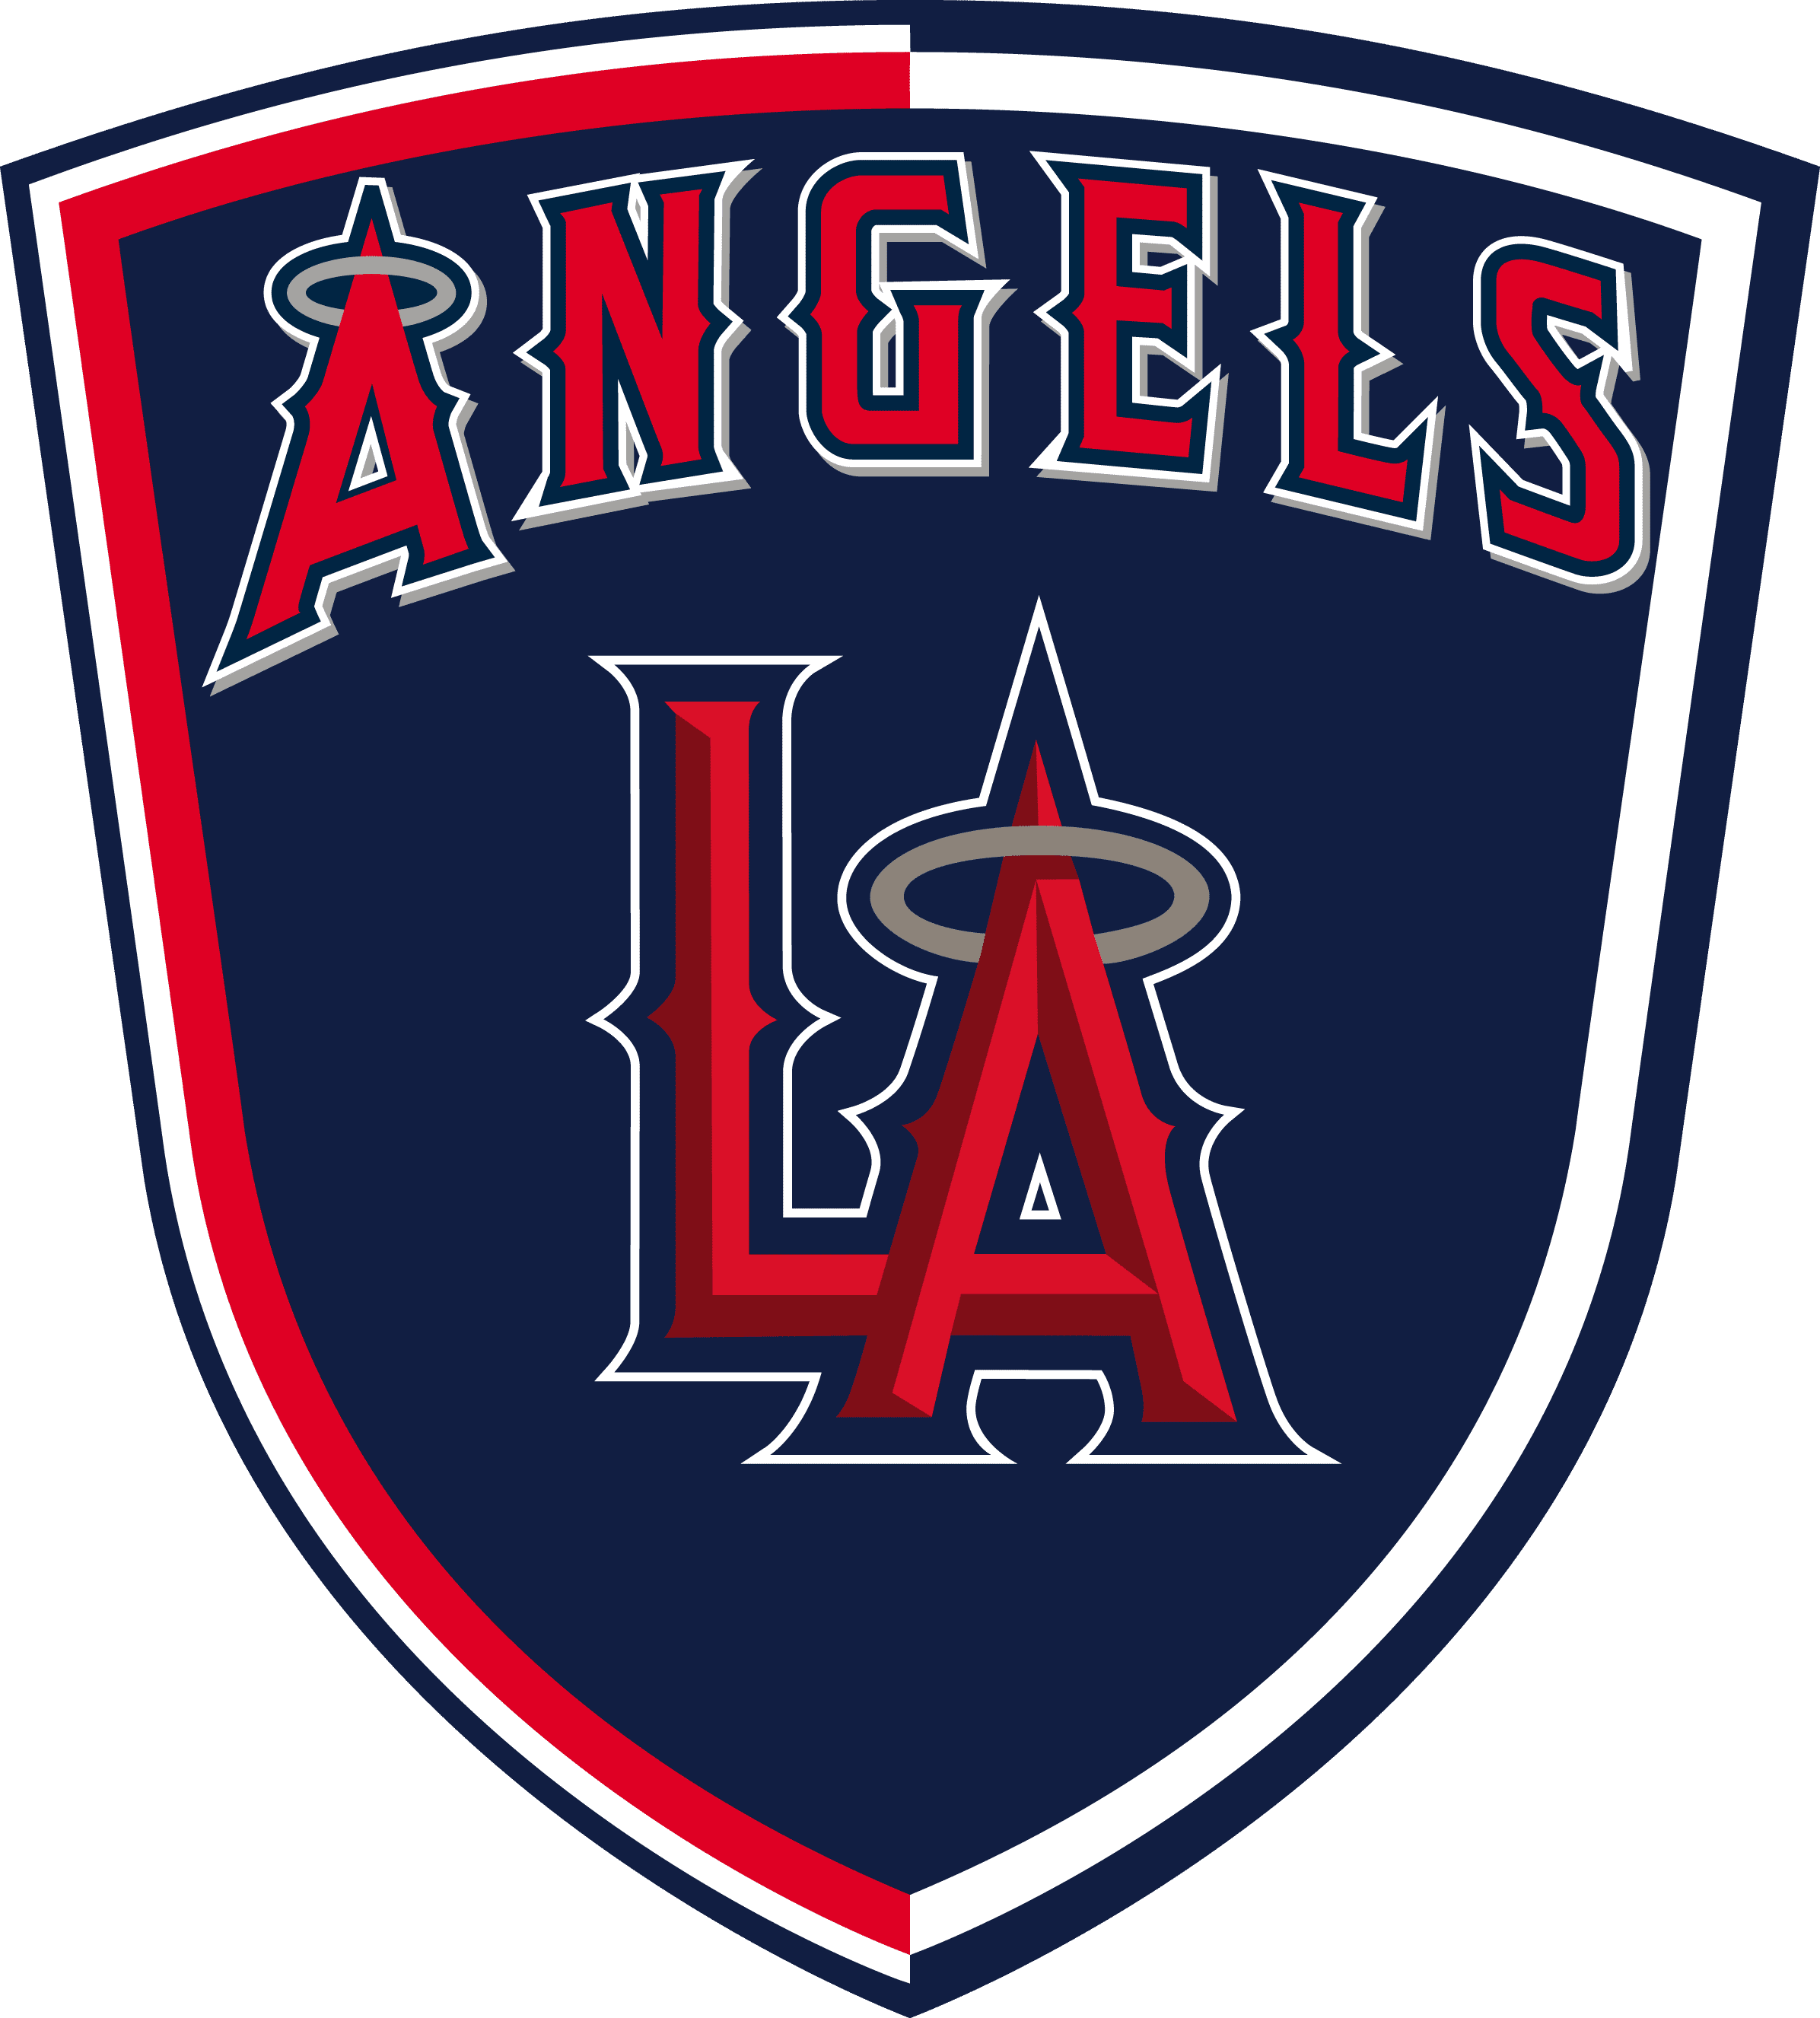 Download los angeles angels of anaheim logo baseball 9EuP4 High q